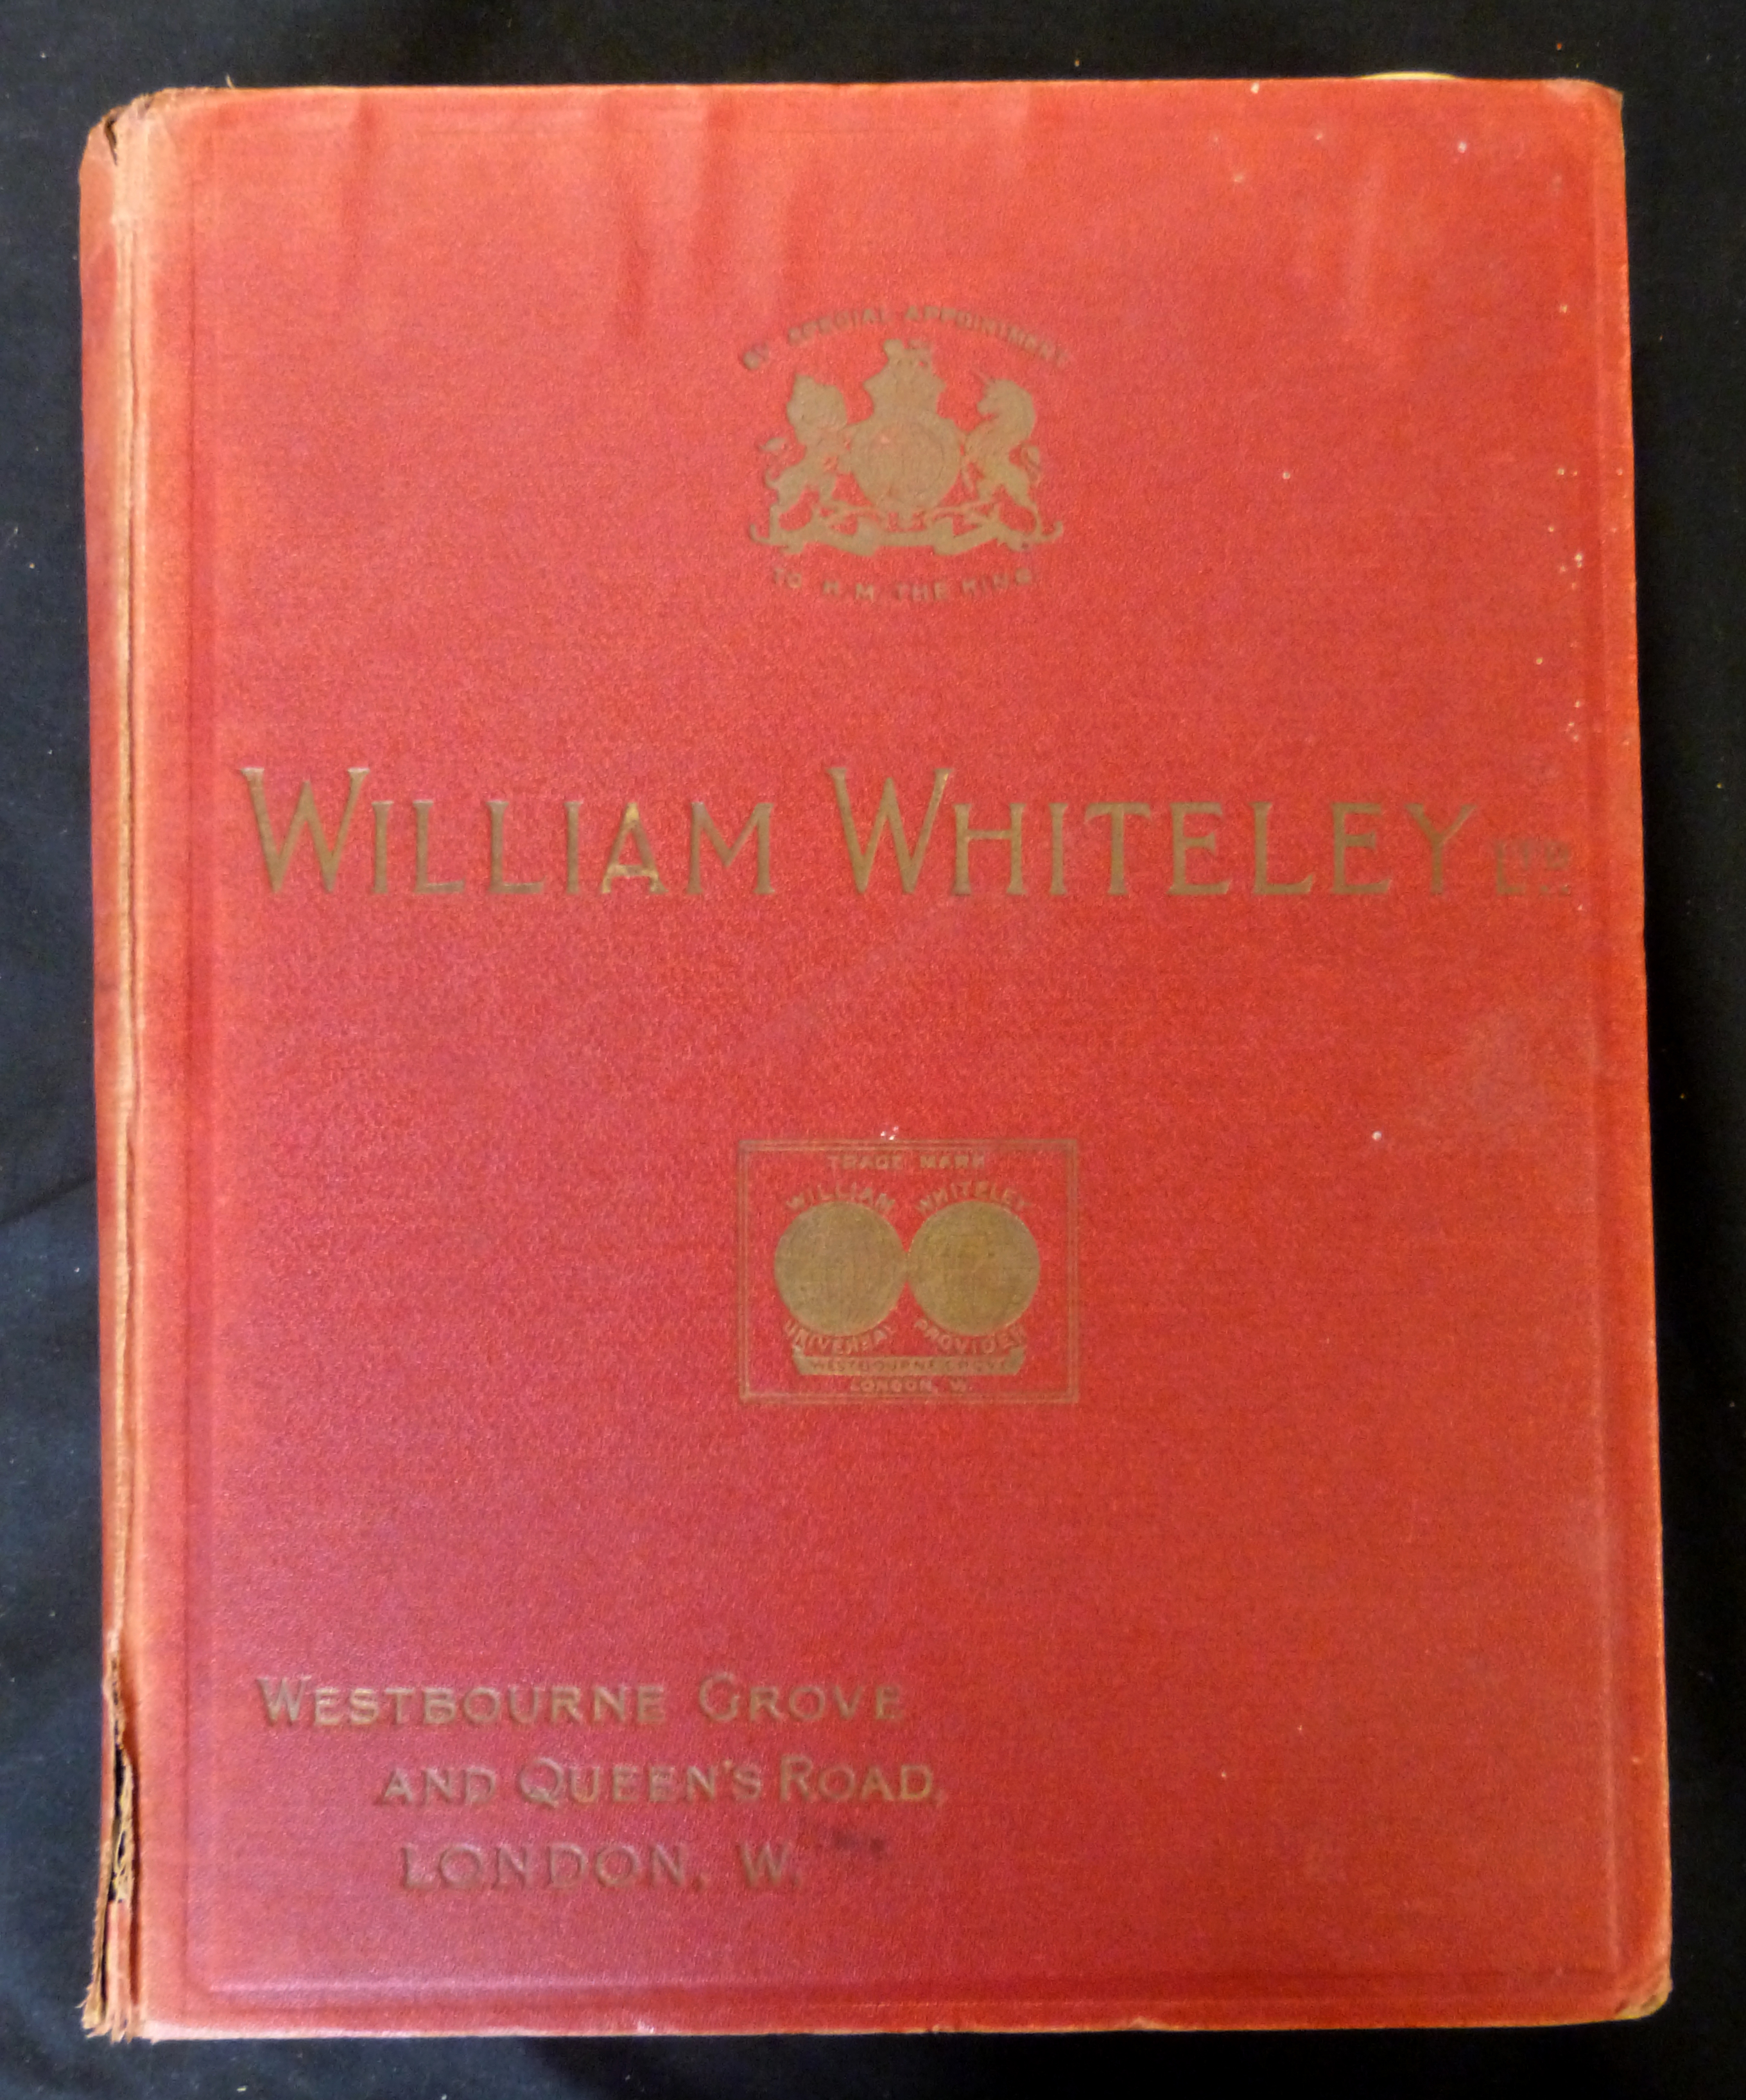 WILLIAM WHITELEY LTD: GENERAL PRICE LIST, 1906, illustrated trade catalogue, 1282pp, 4to, original